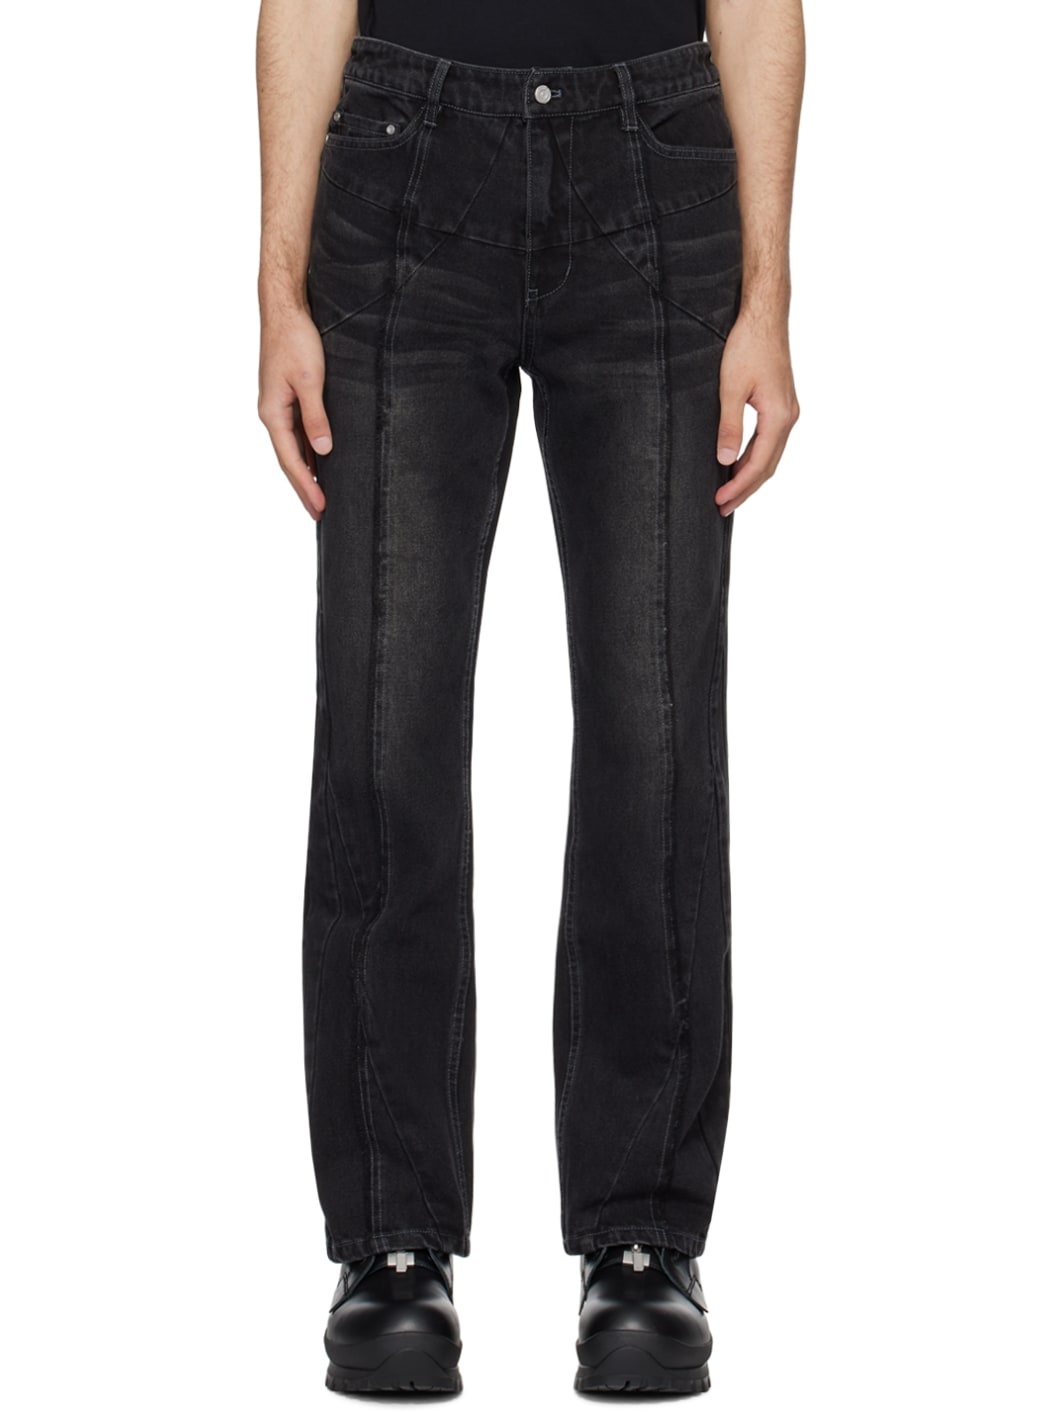 Black Stagger Streamline Arch Jeans - 1